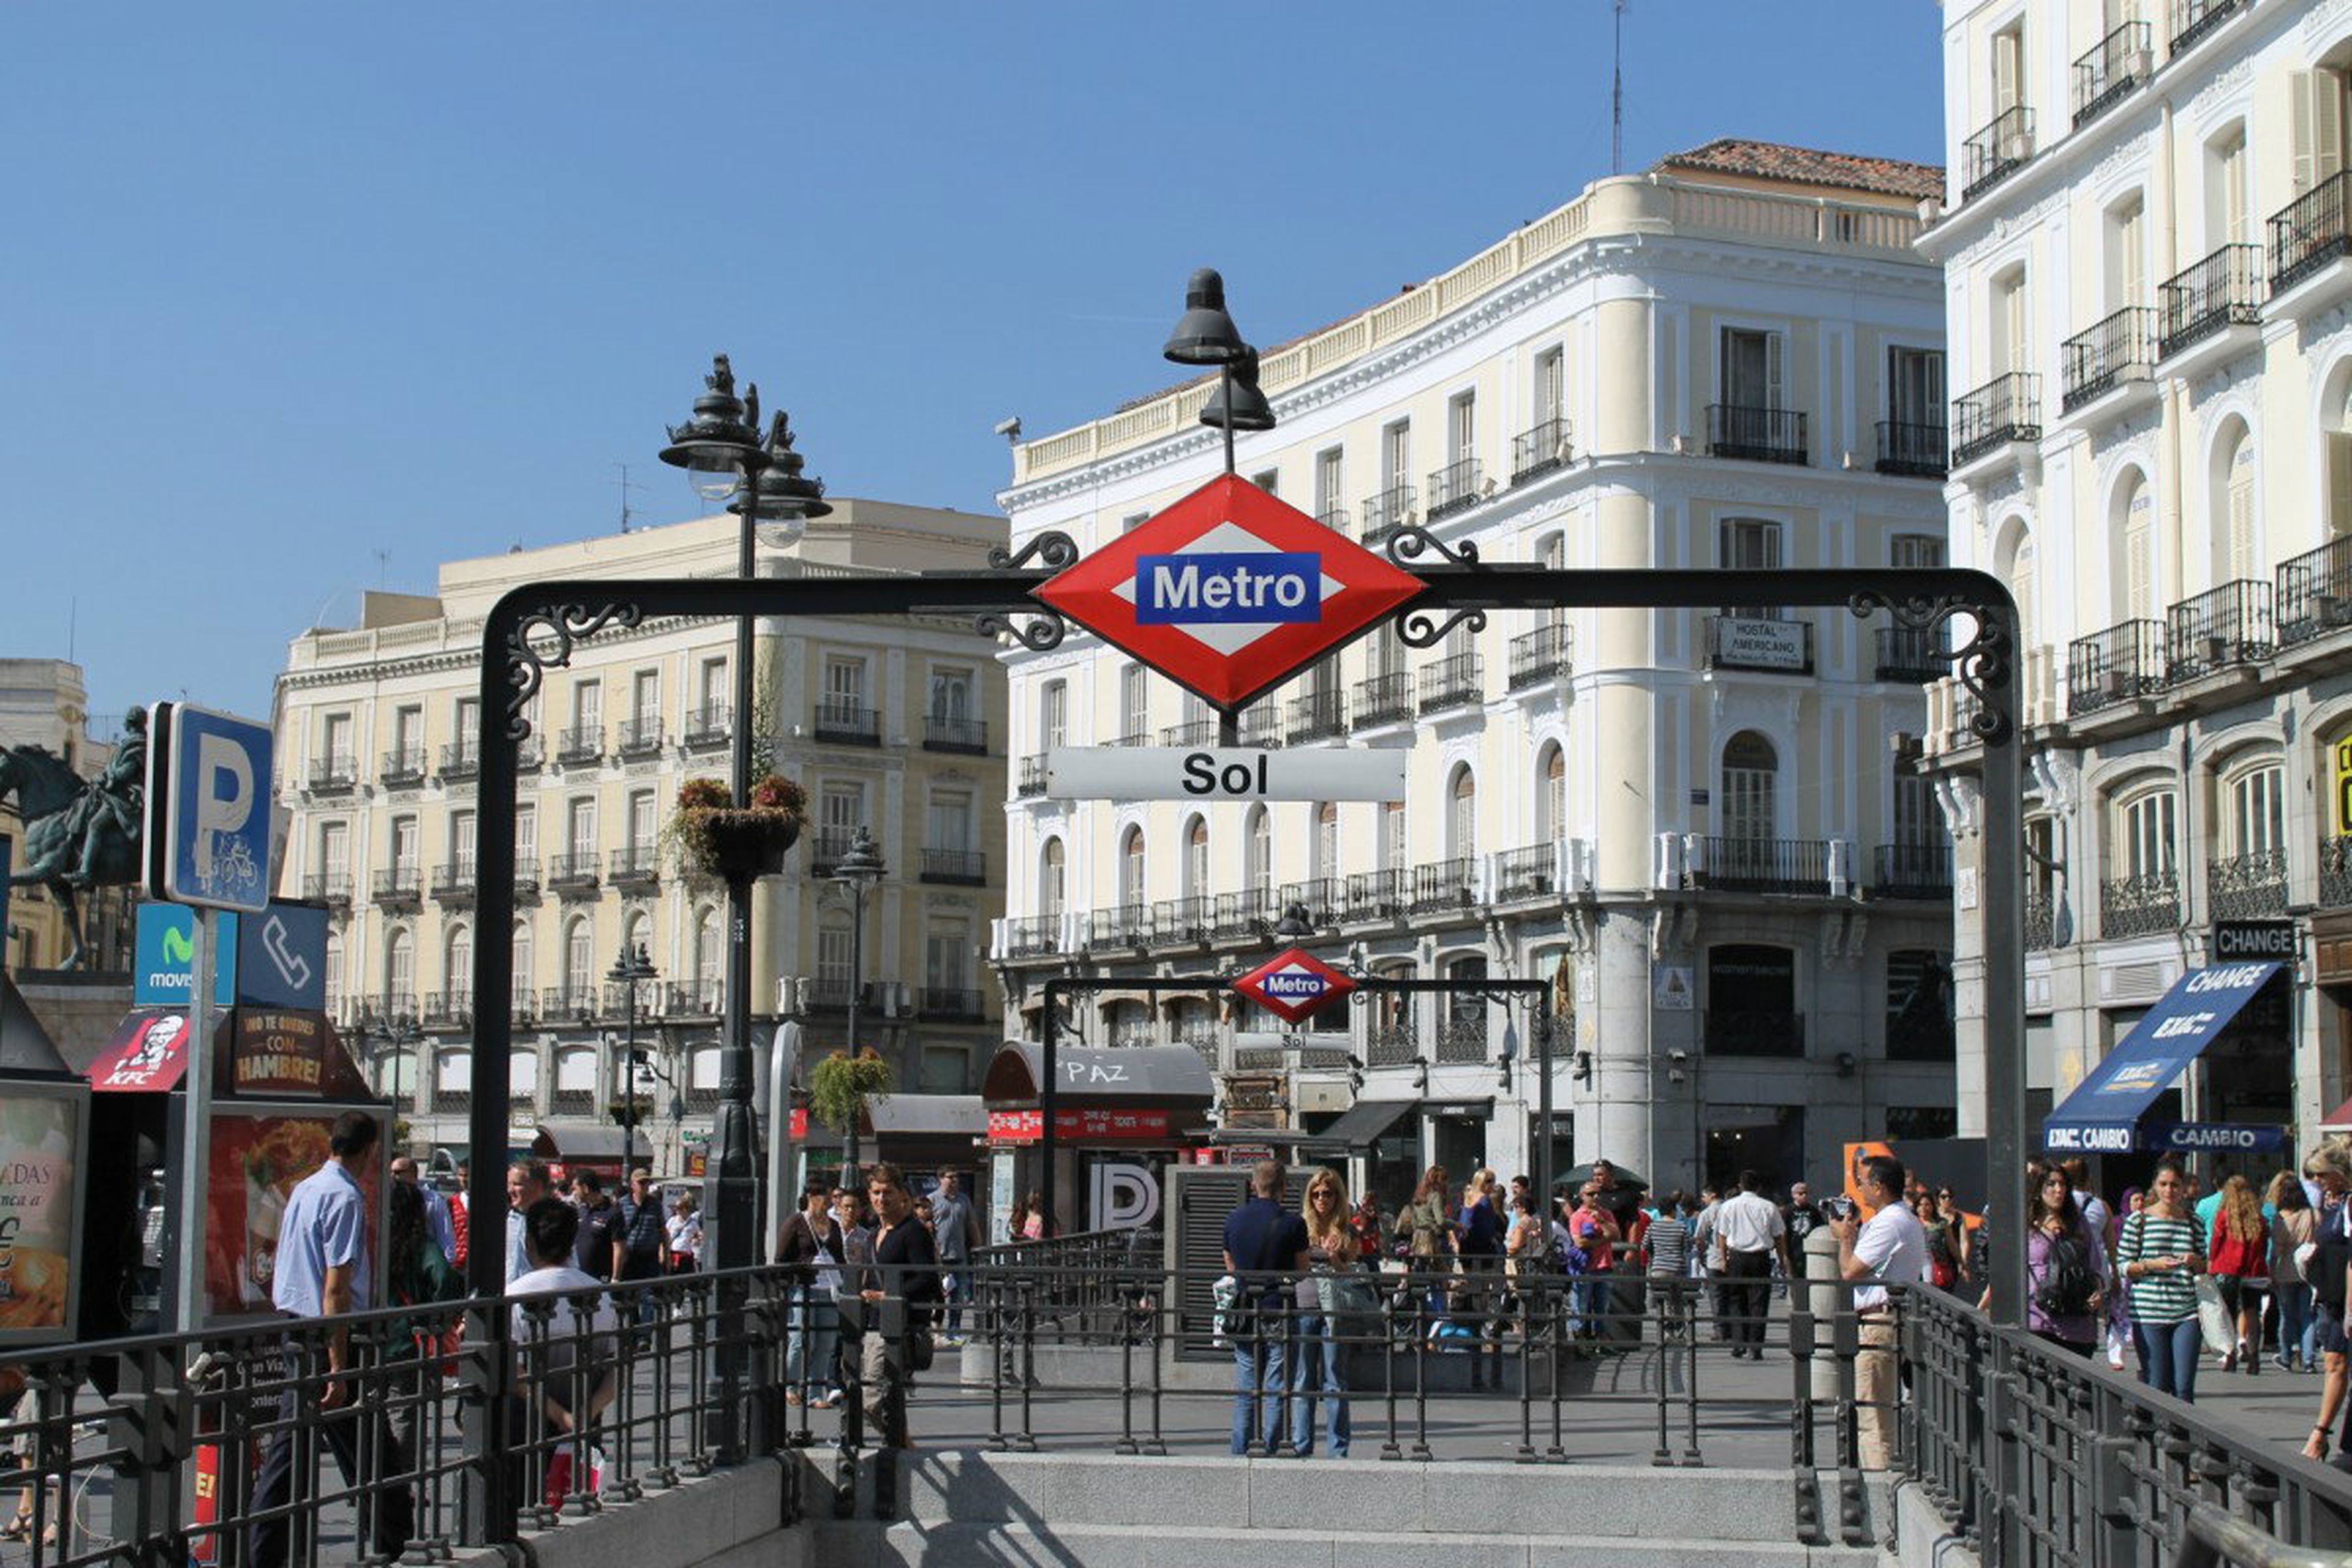 Una imagen de la puerta del Sol de Madrid.